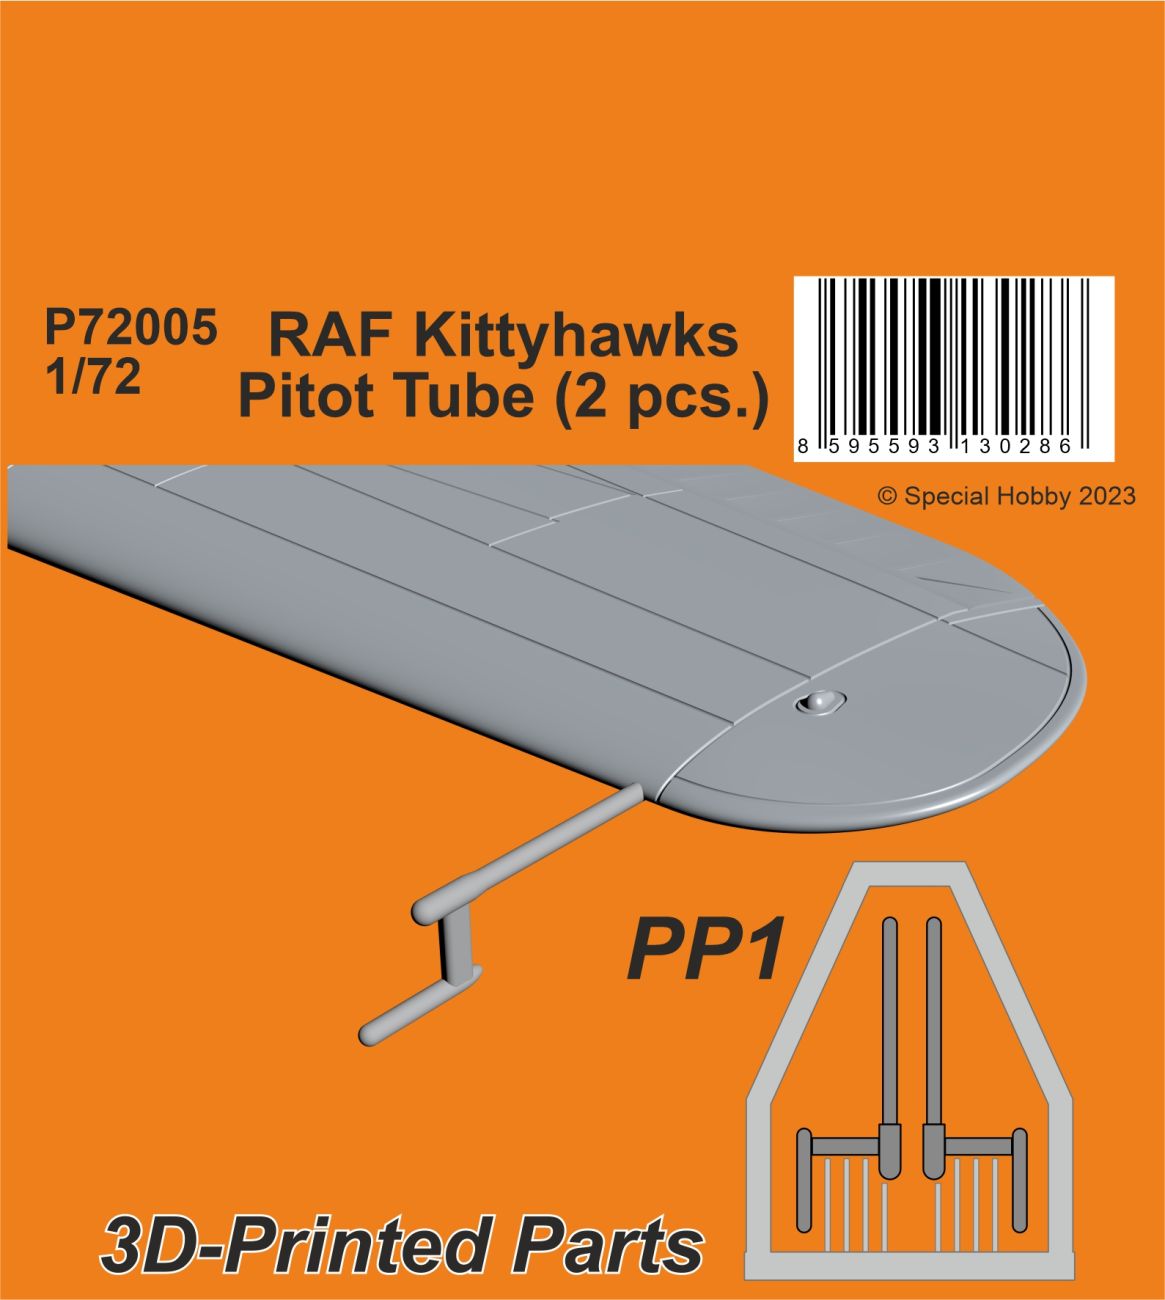 1/72 RAF Kittyhawks Pitot Tube (2 pcs.)